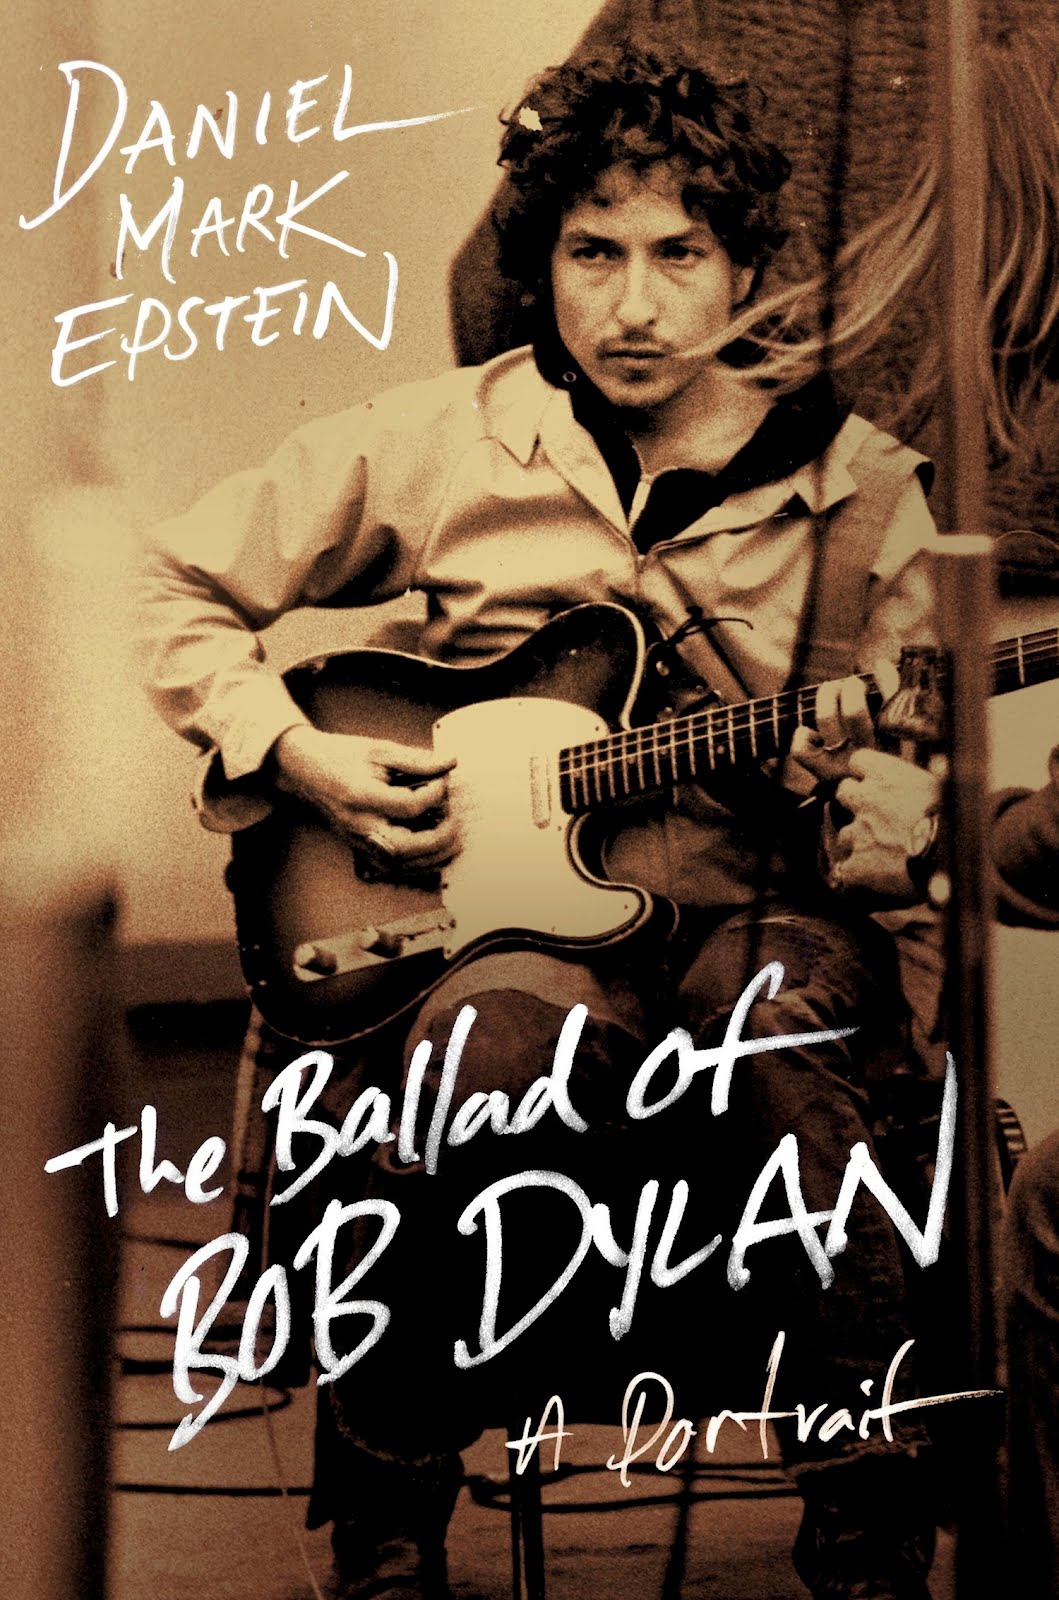 The ballad of Bob Dylan A Portrait